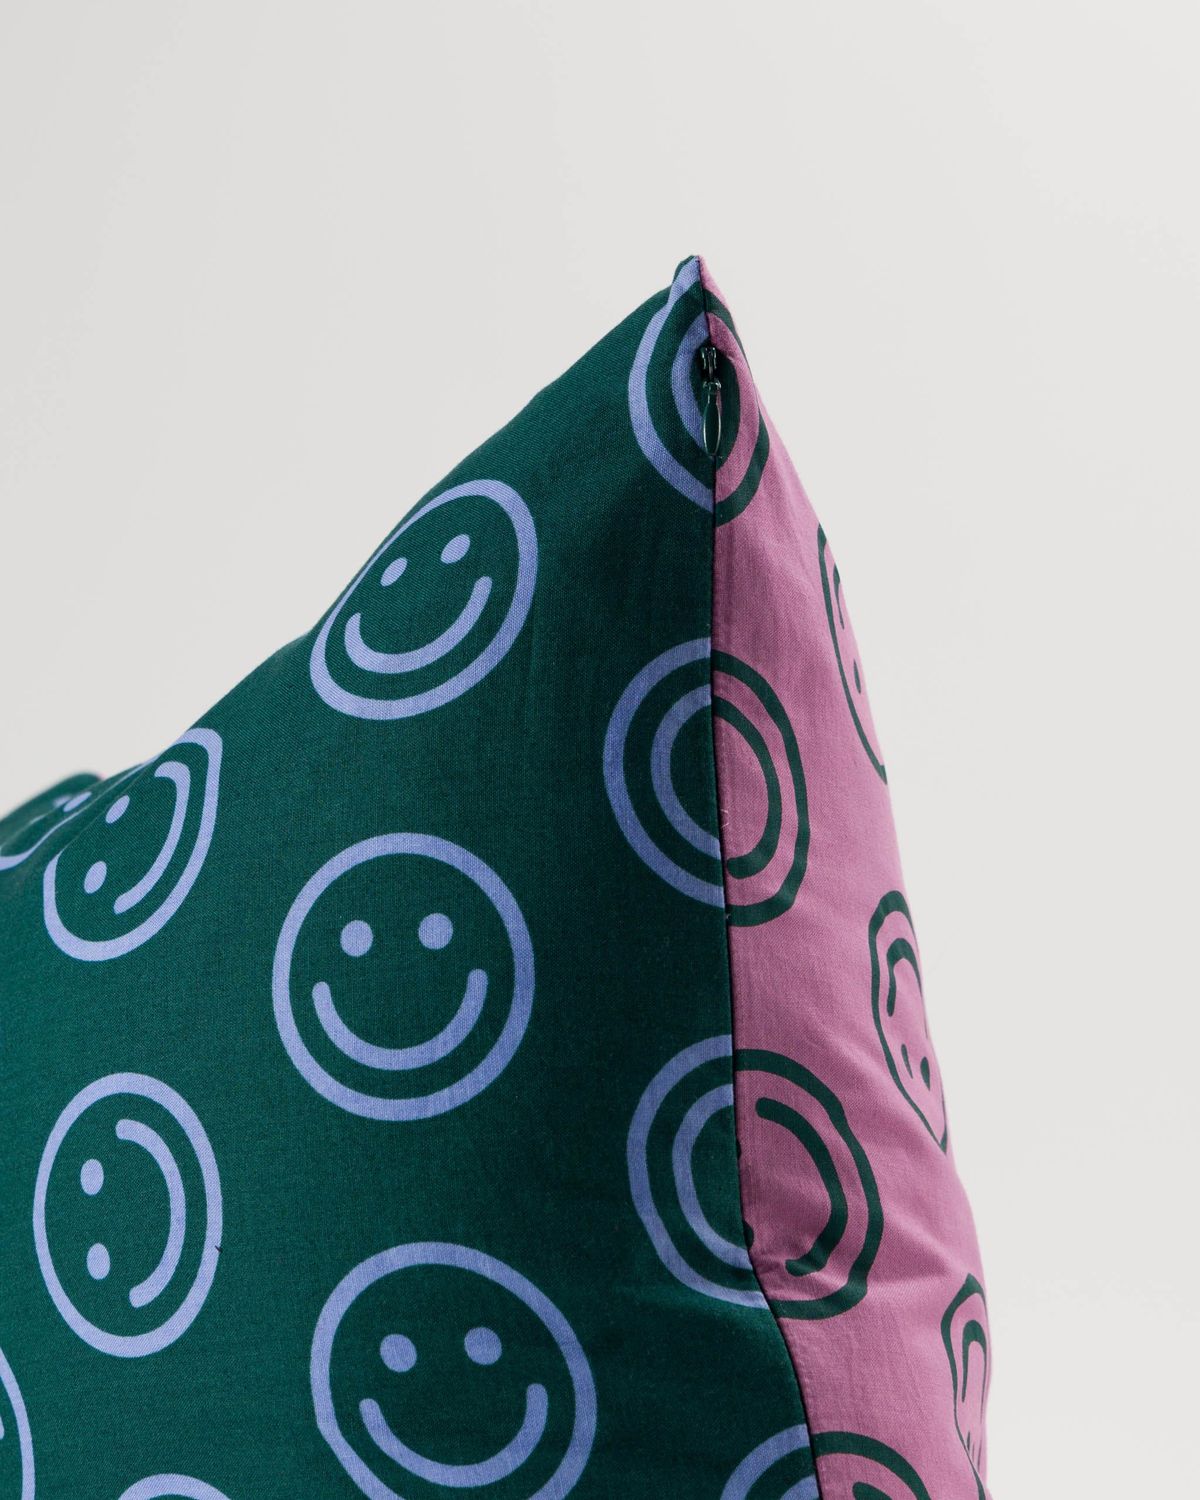 BAGGU cushion cover - Happy Smiley Mix